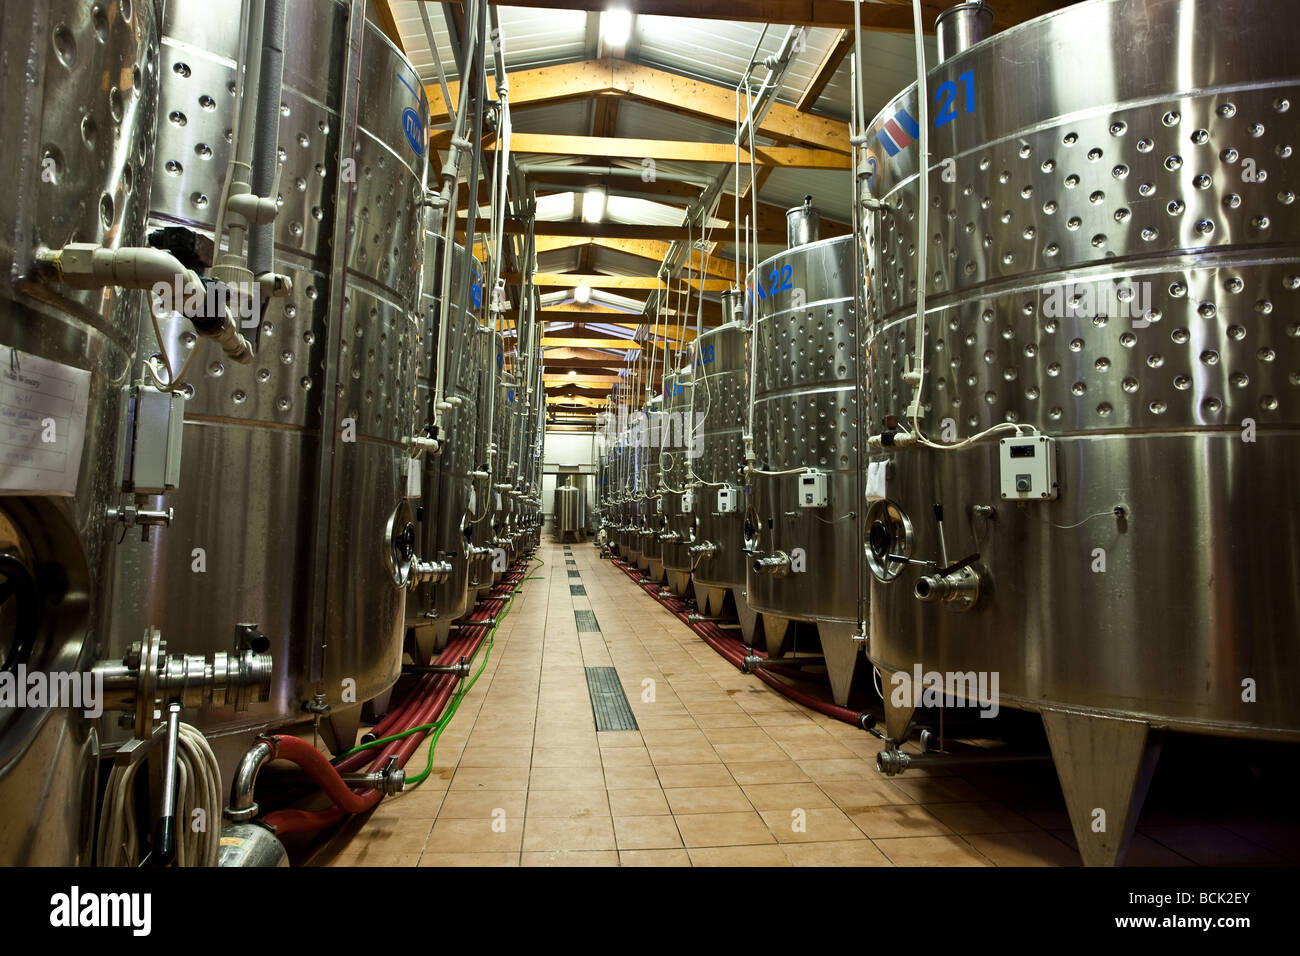 Fermentation tanks for wine production Stock Photo